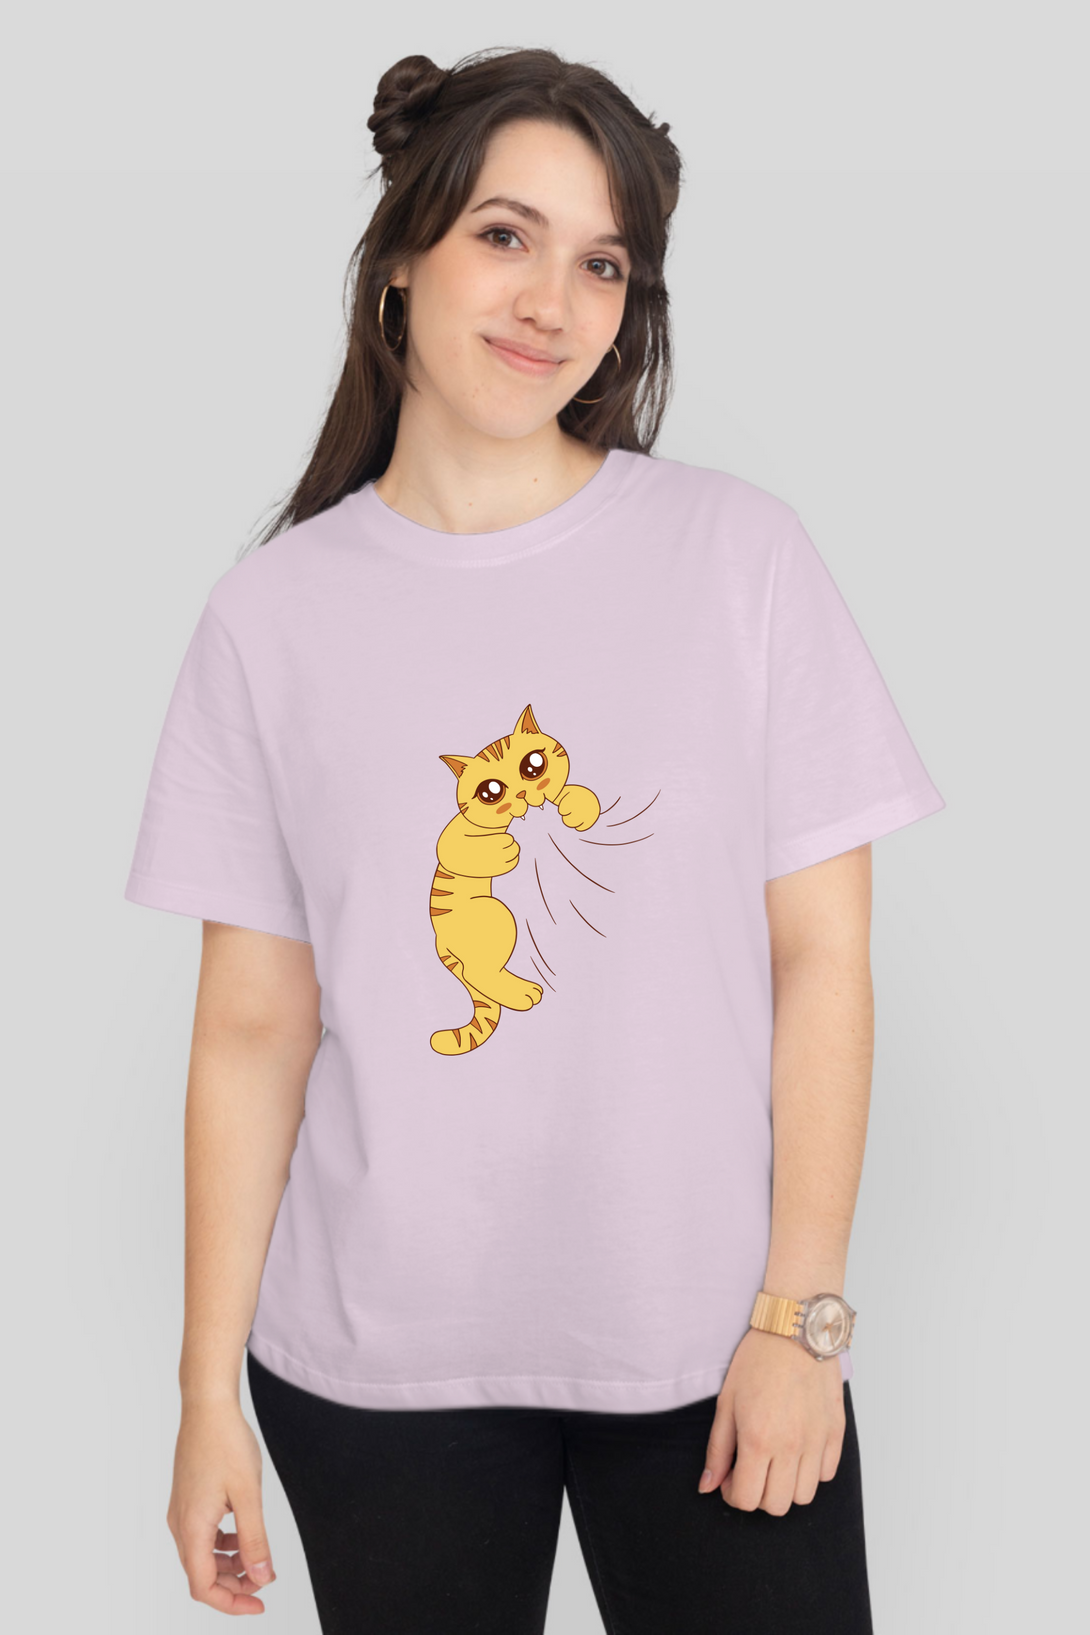 Cat Biting Printed T-Shirt For Women - WowWaves - 10